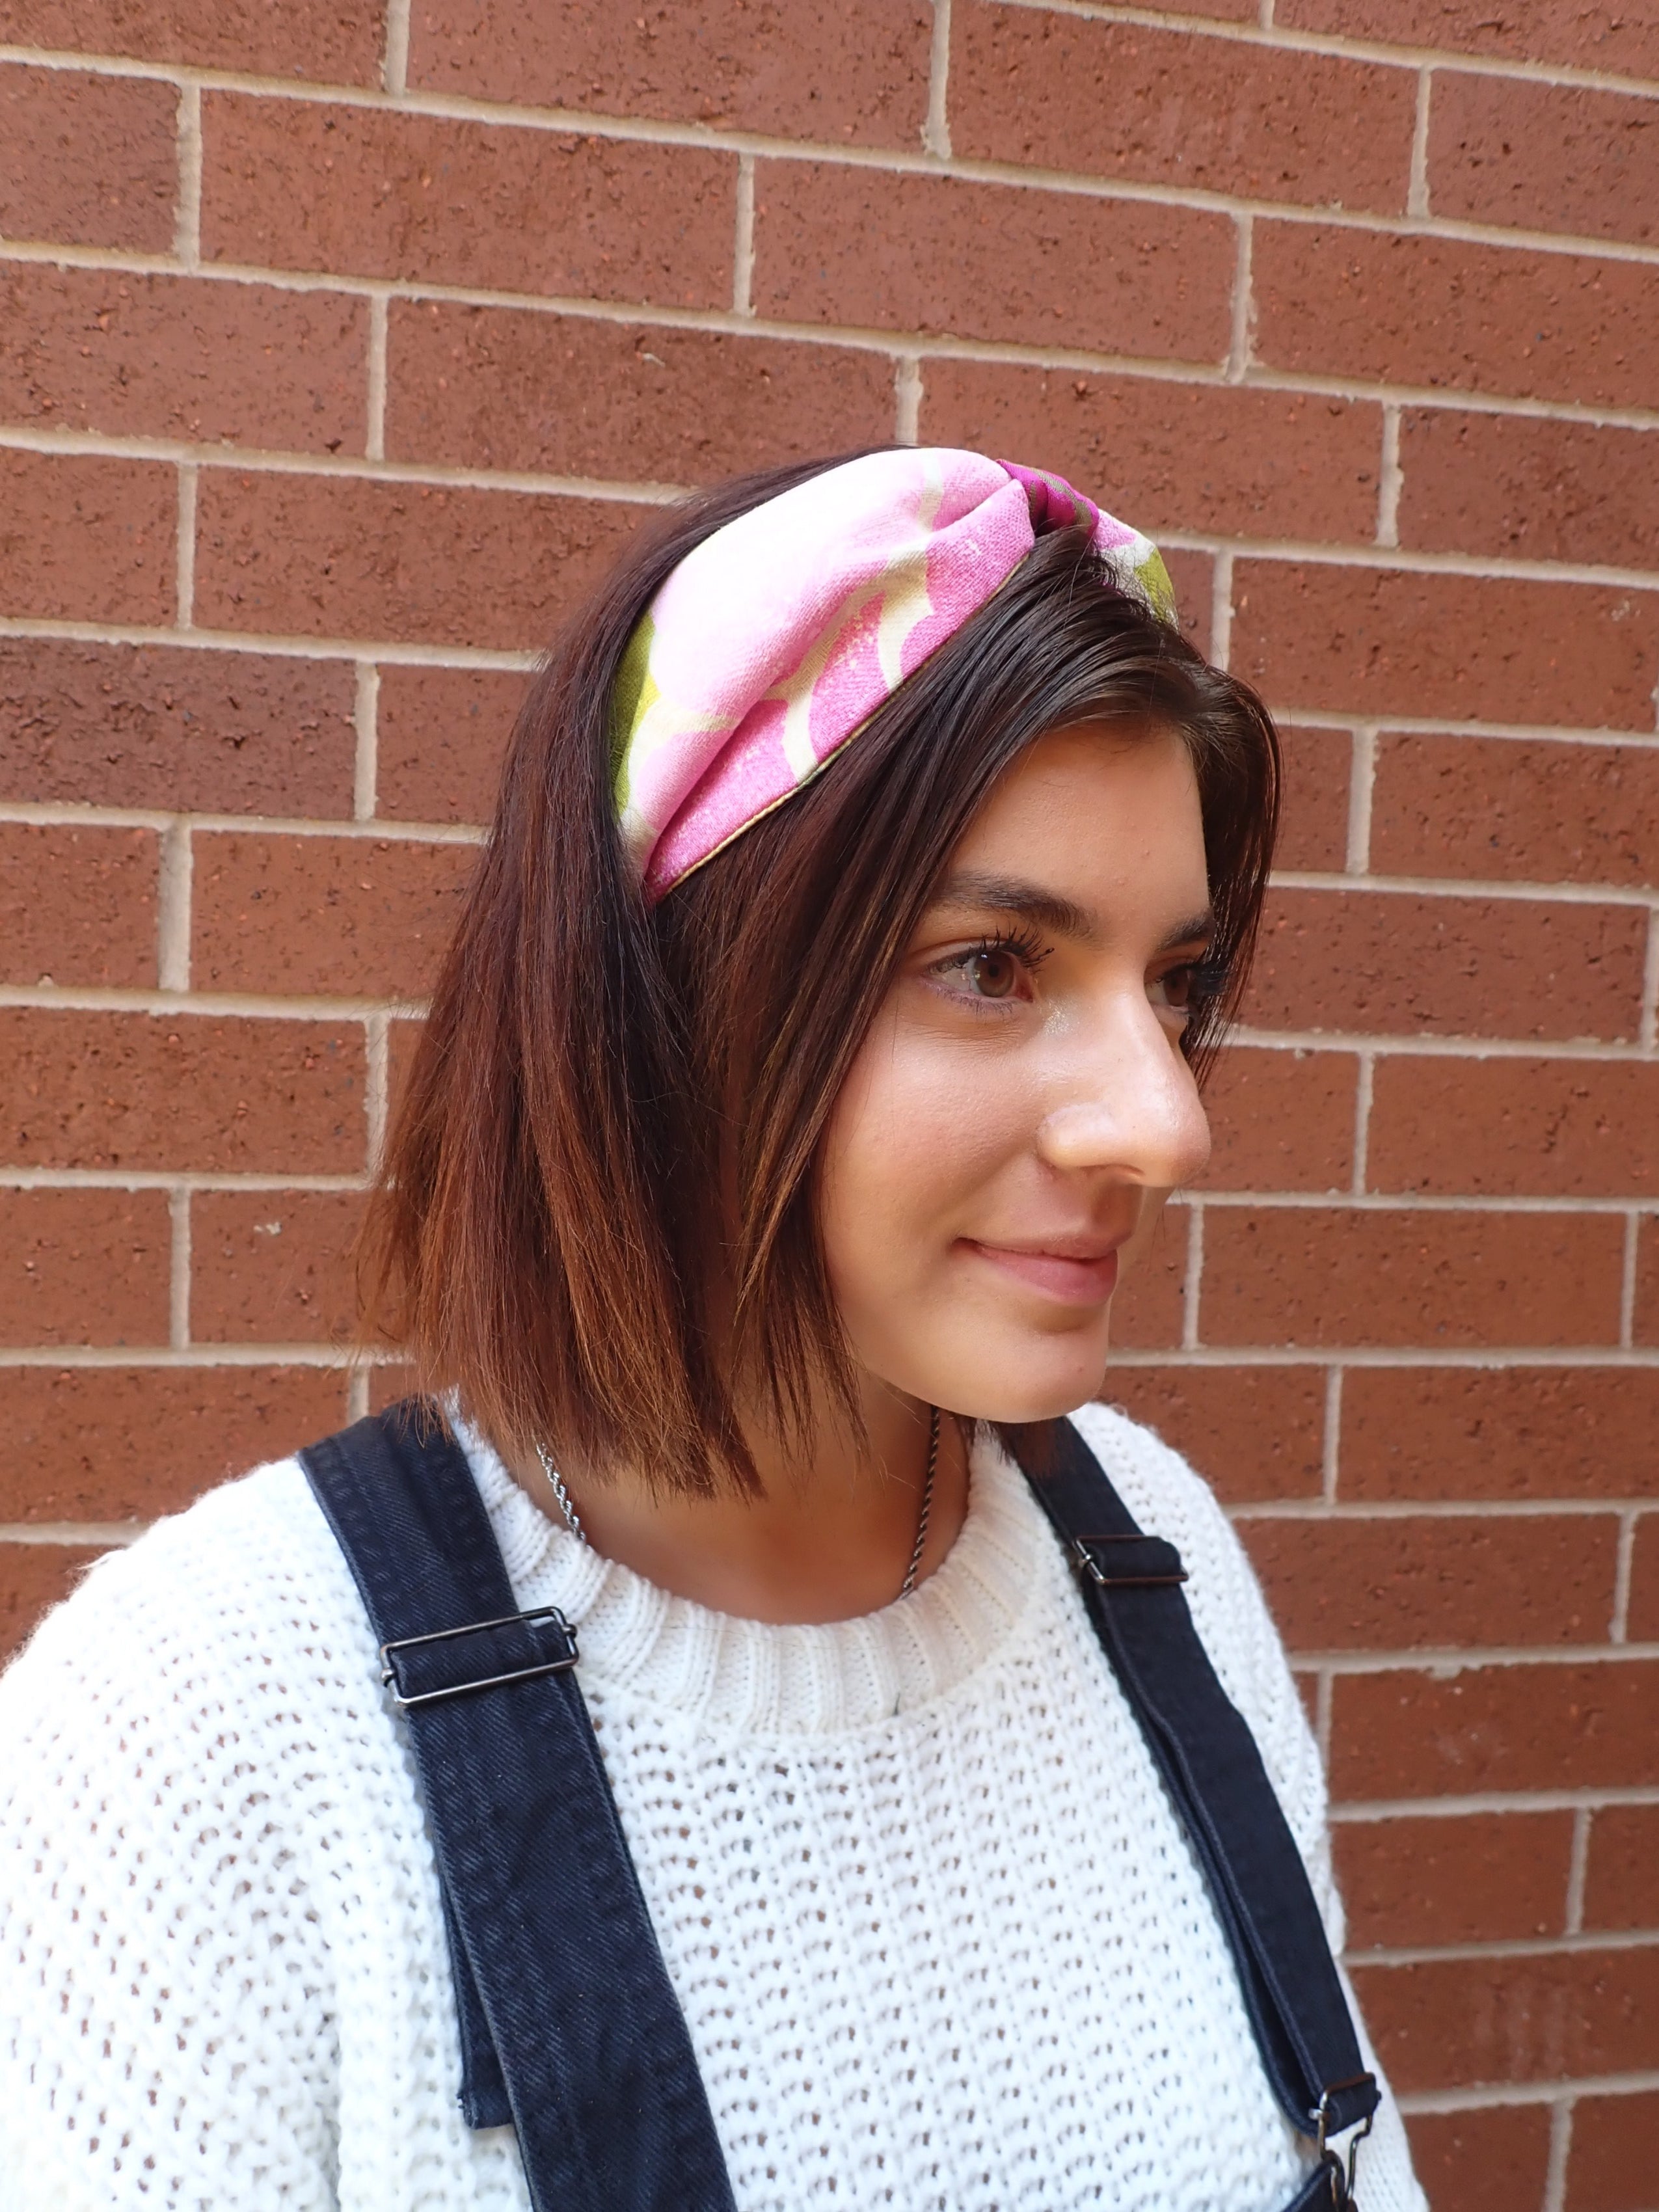 Ladies Purple, Pink and Green Chic Linen Turban Headband. Repurposed Fabric Headband Hat Accessory.